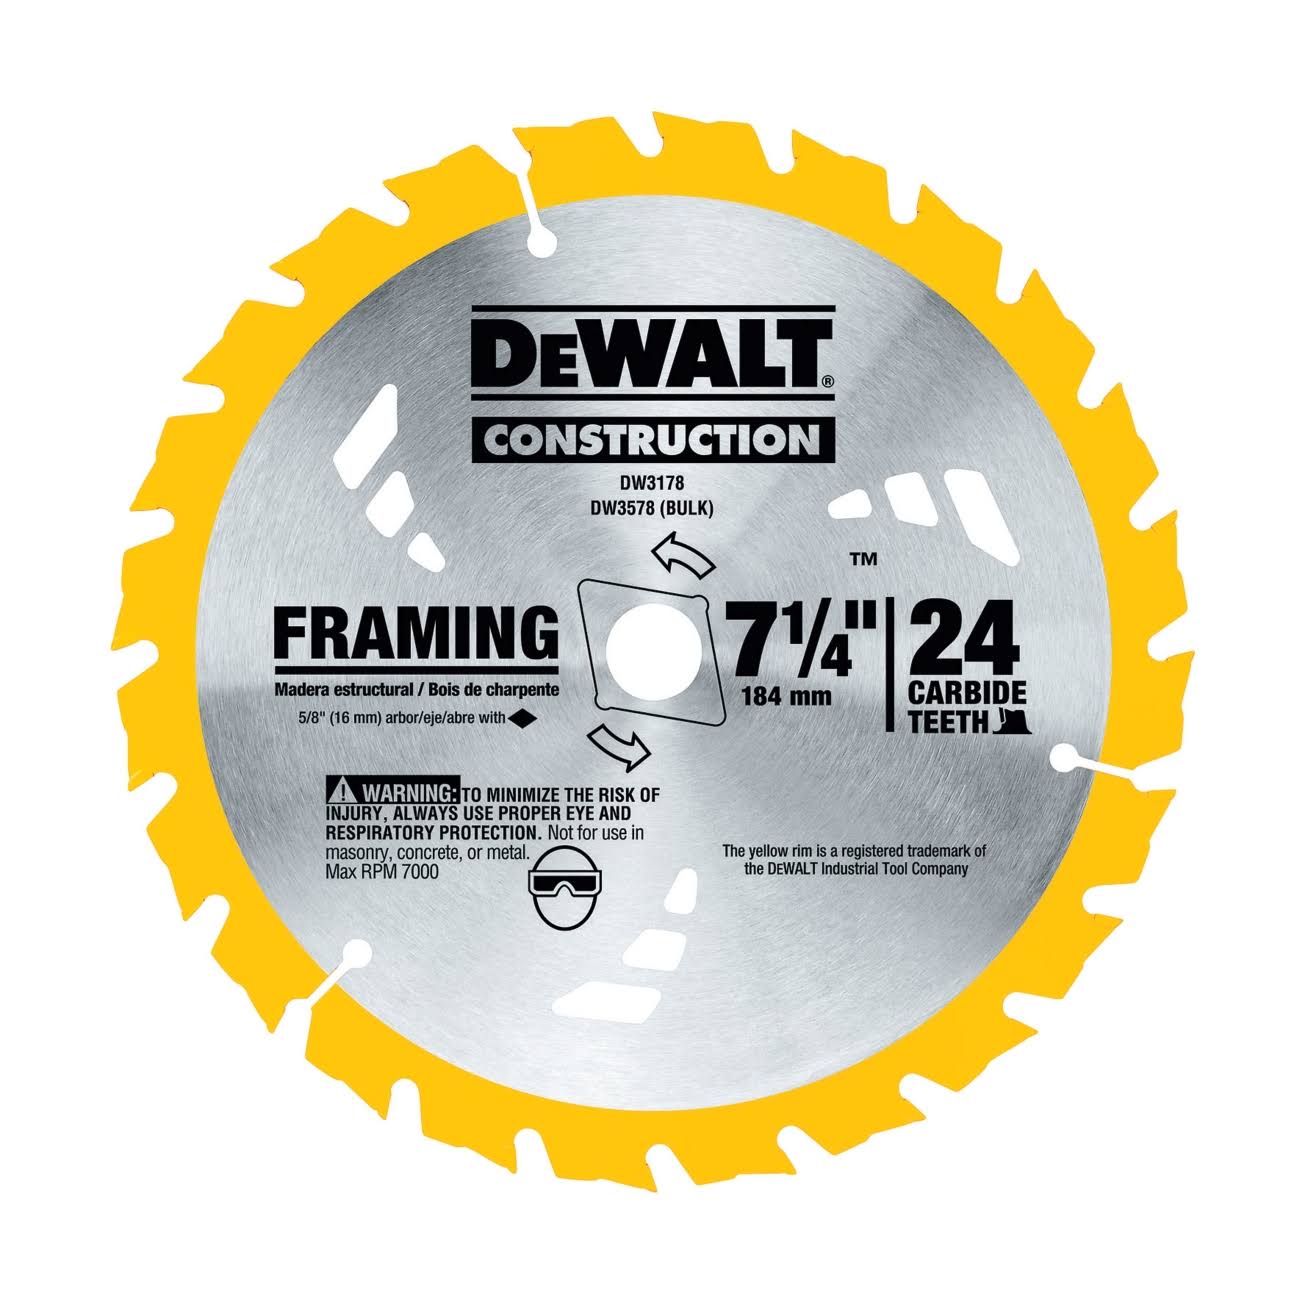 Dewalt Construction Framing Saw Blade - 7.5 in, 24T